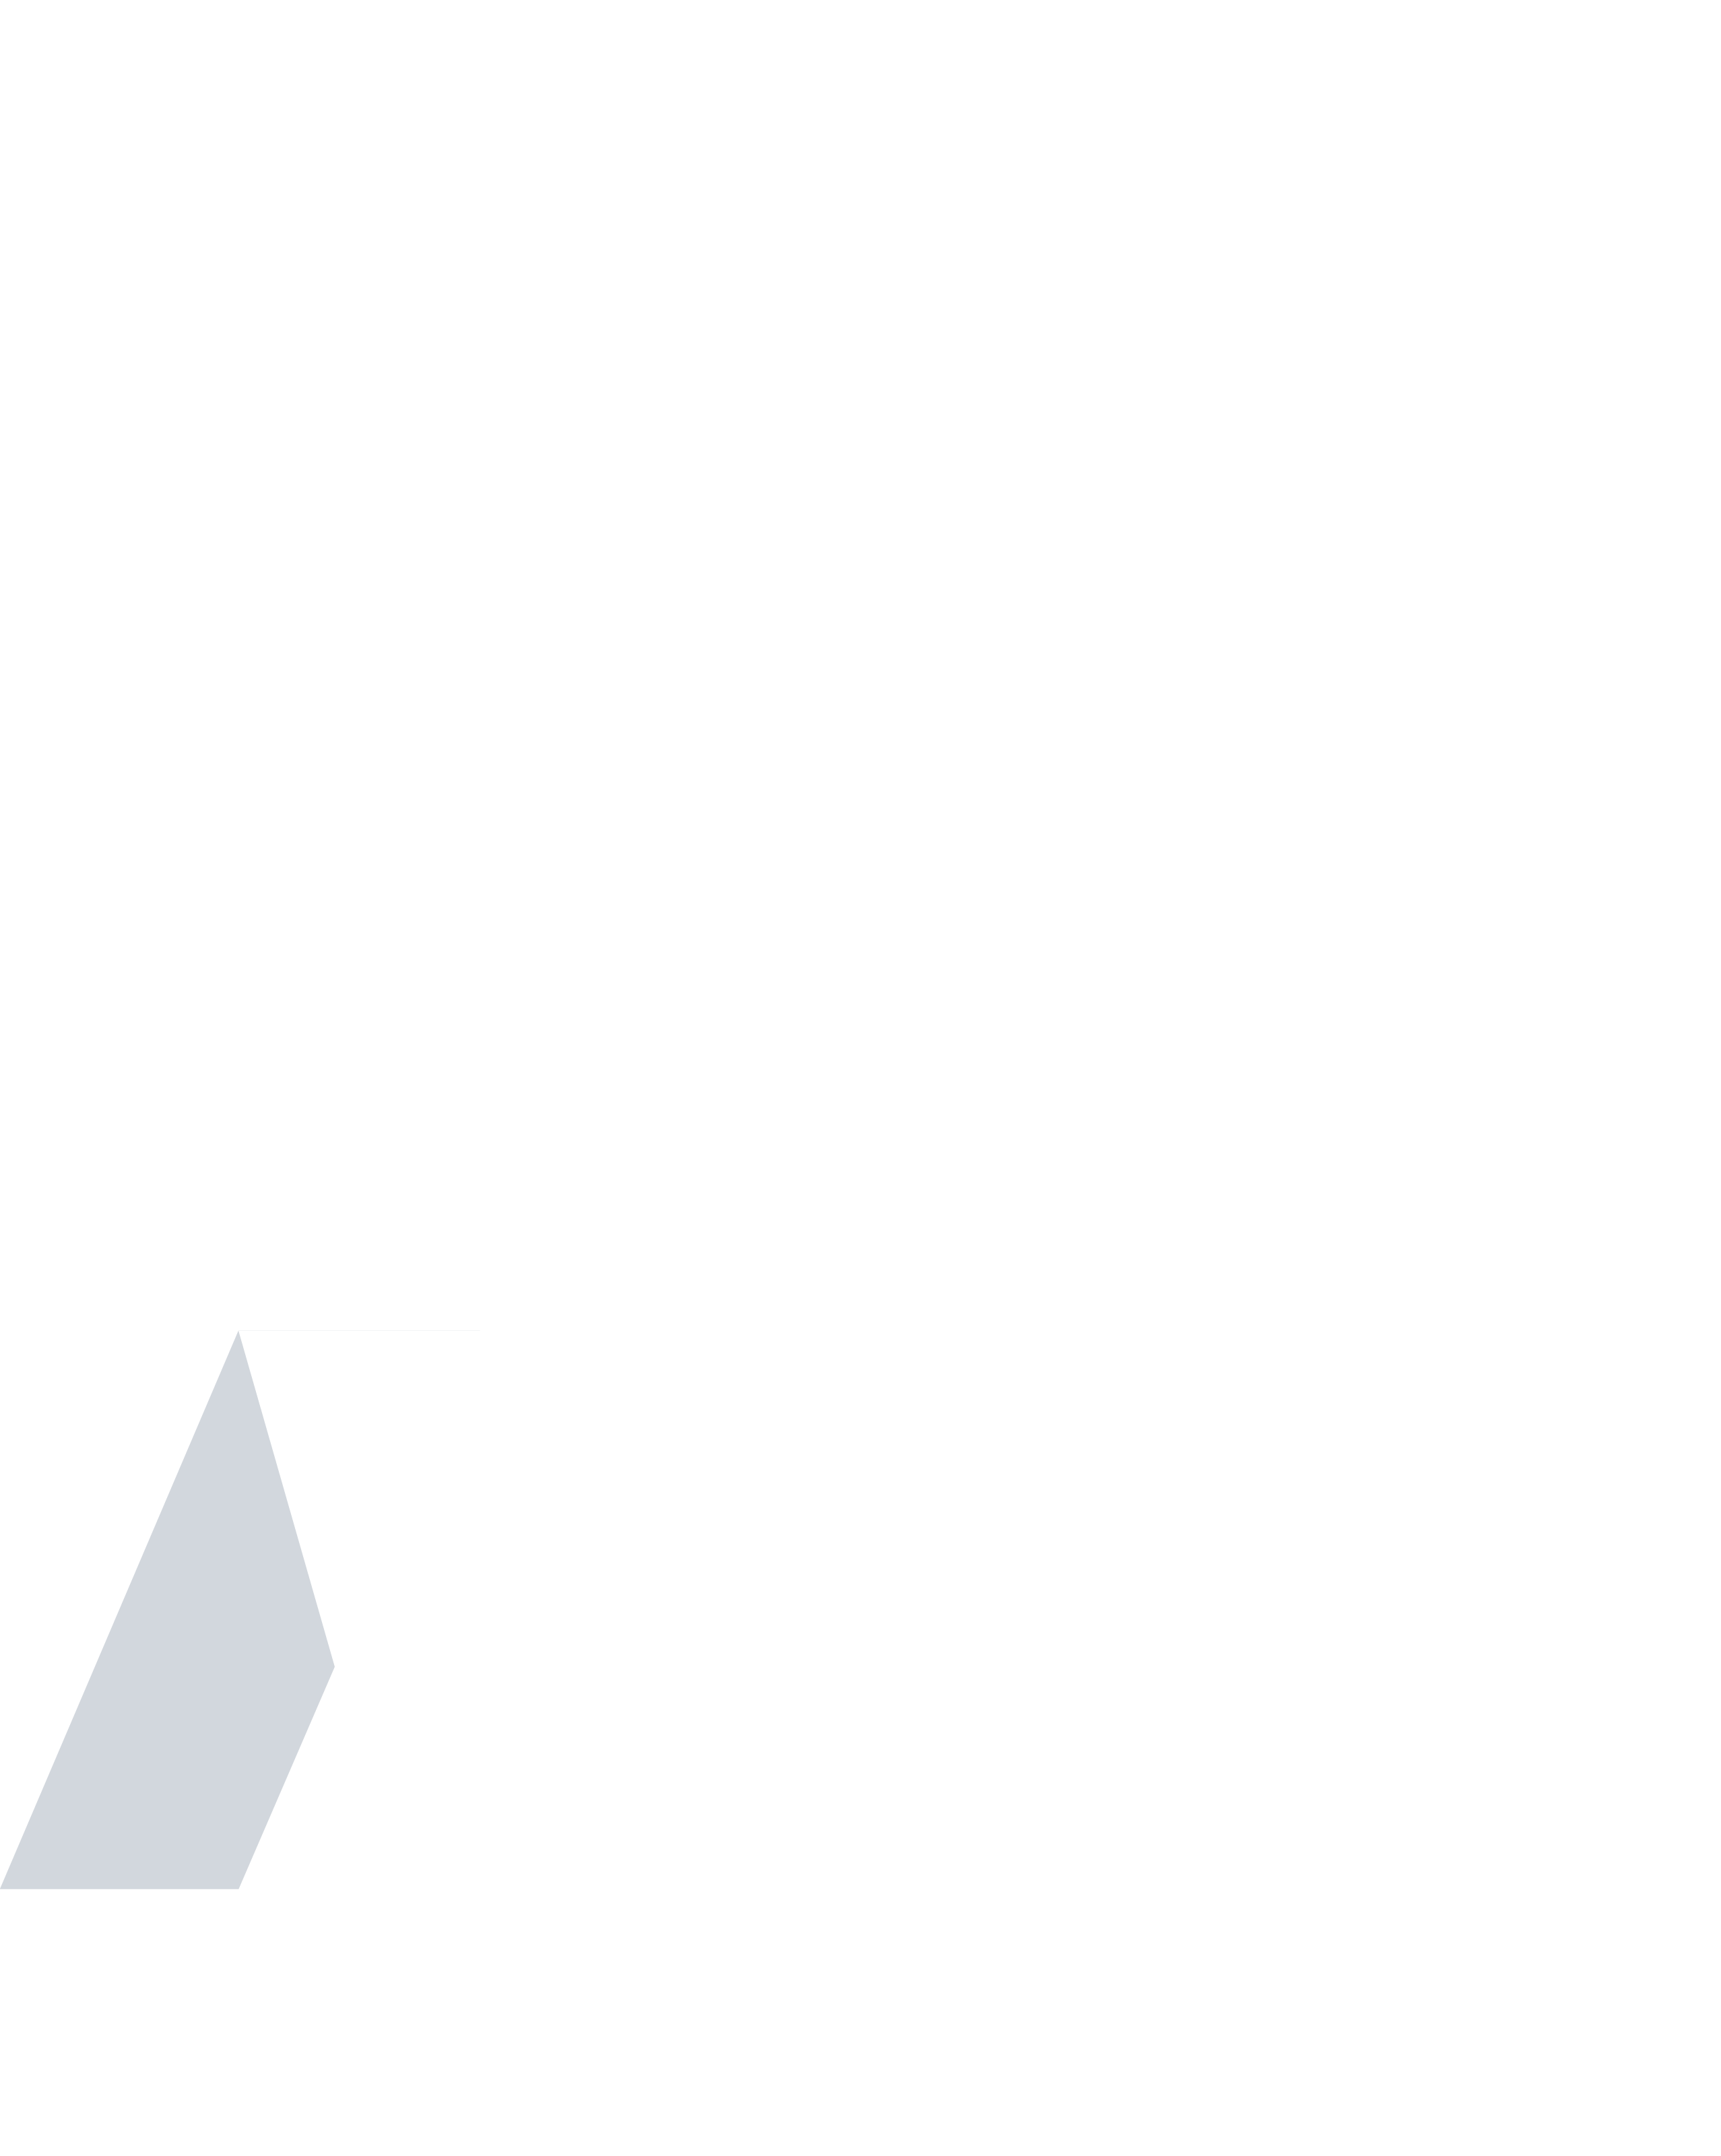 main header logo